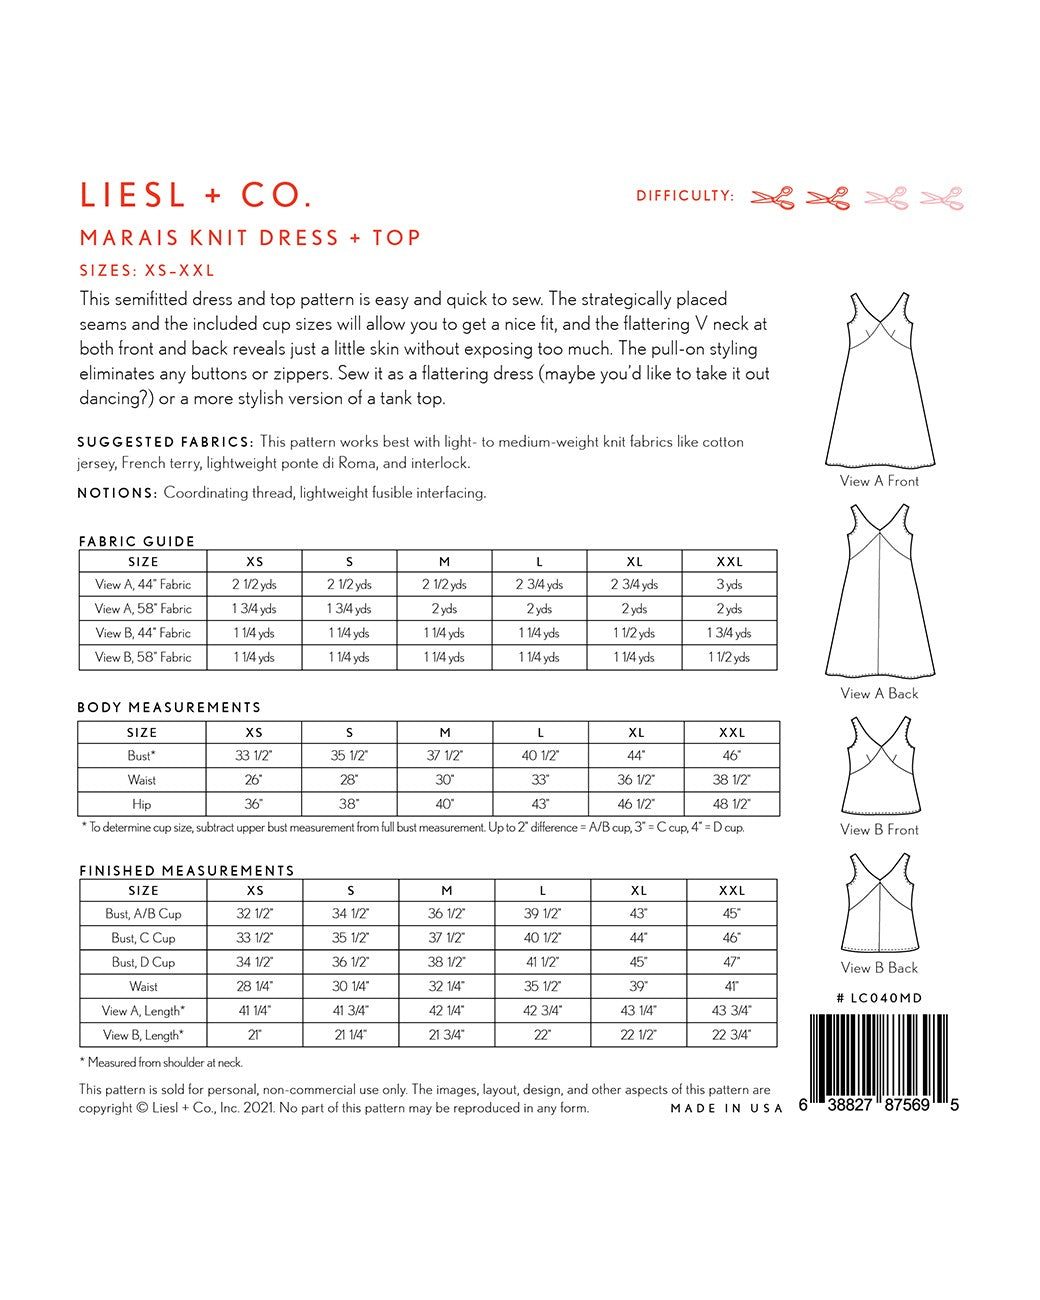 Marais Knit Dress + Top Sewing Pattern